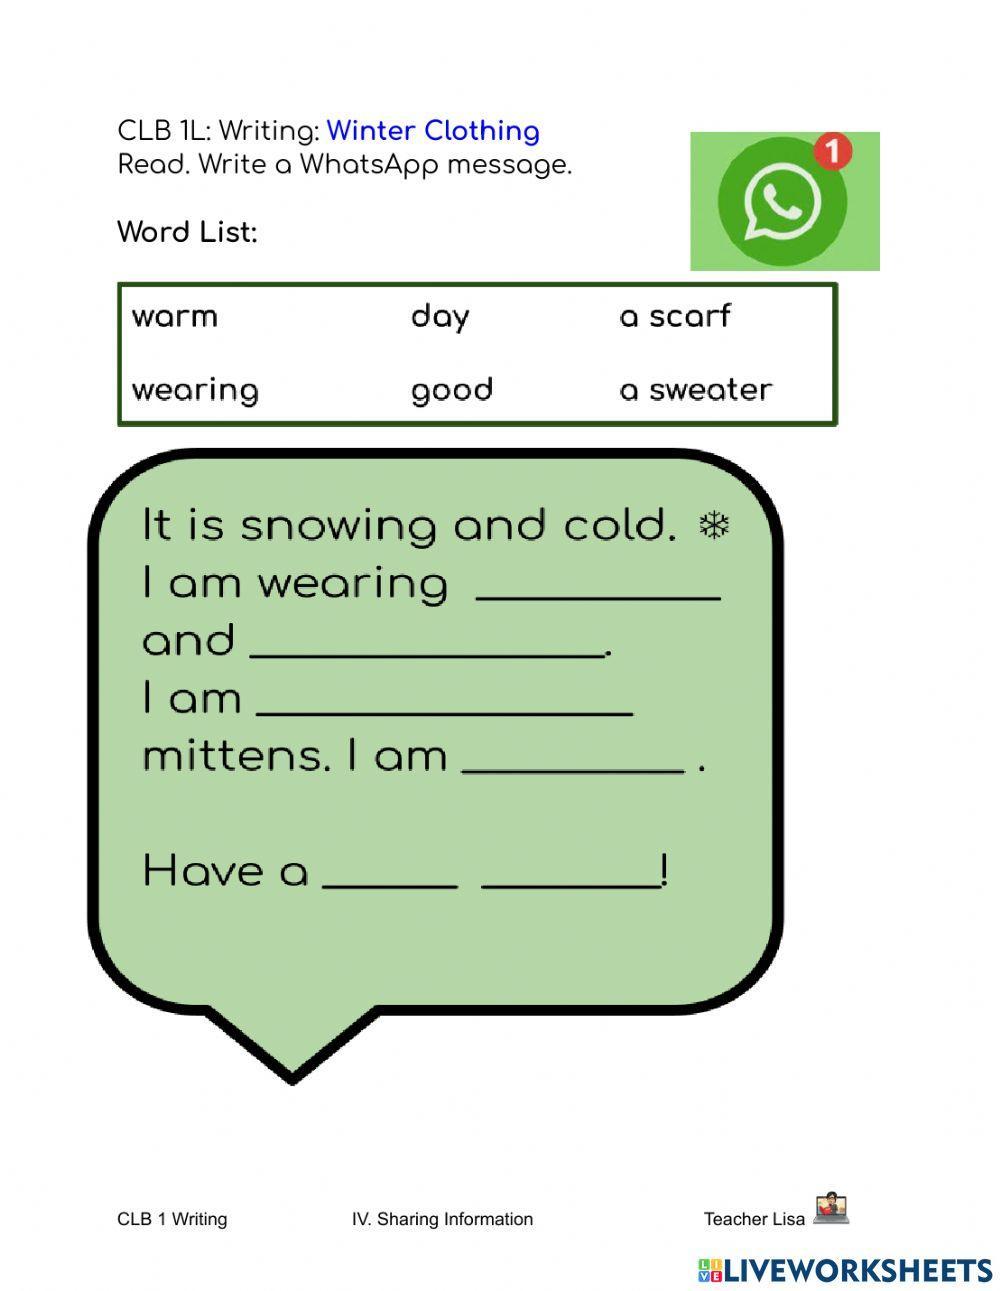 CLB 1L Writing: WhatsApp Message